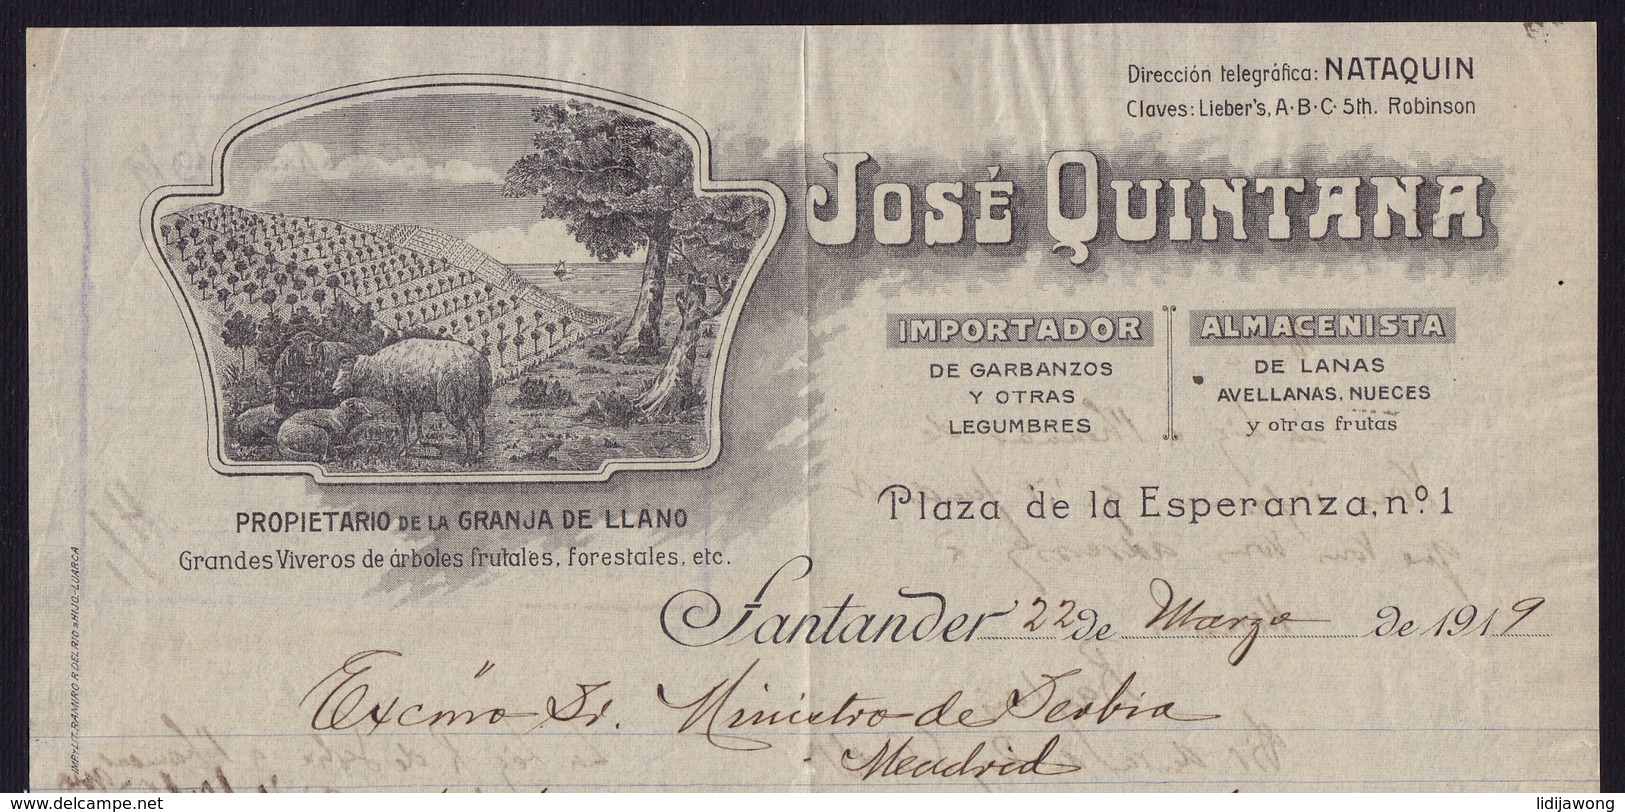 SPAIN - Cantabria - SANTANDER - JOSE QUINTANA -INVOICE RECHNUNG FAKTURA 1919 (see Sales Conditions) - Espagne